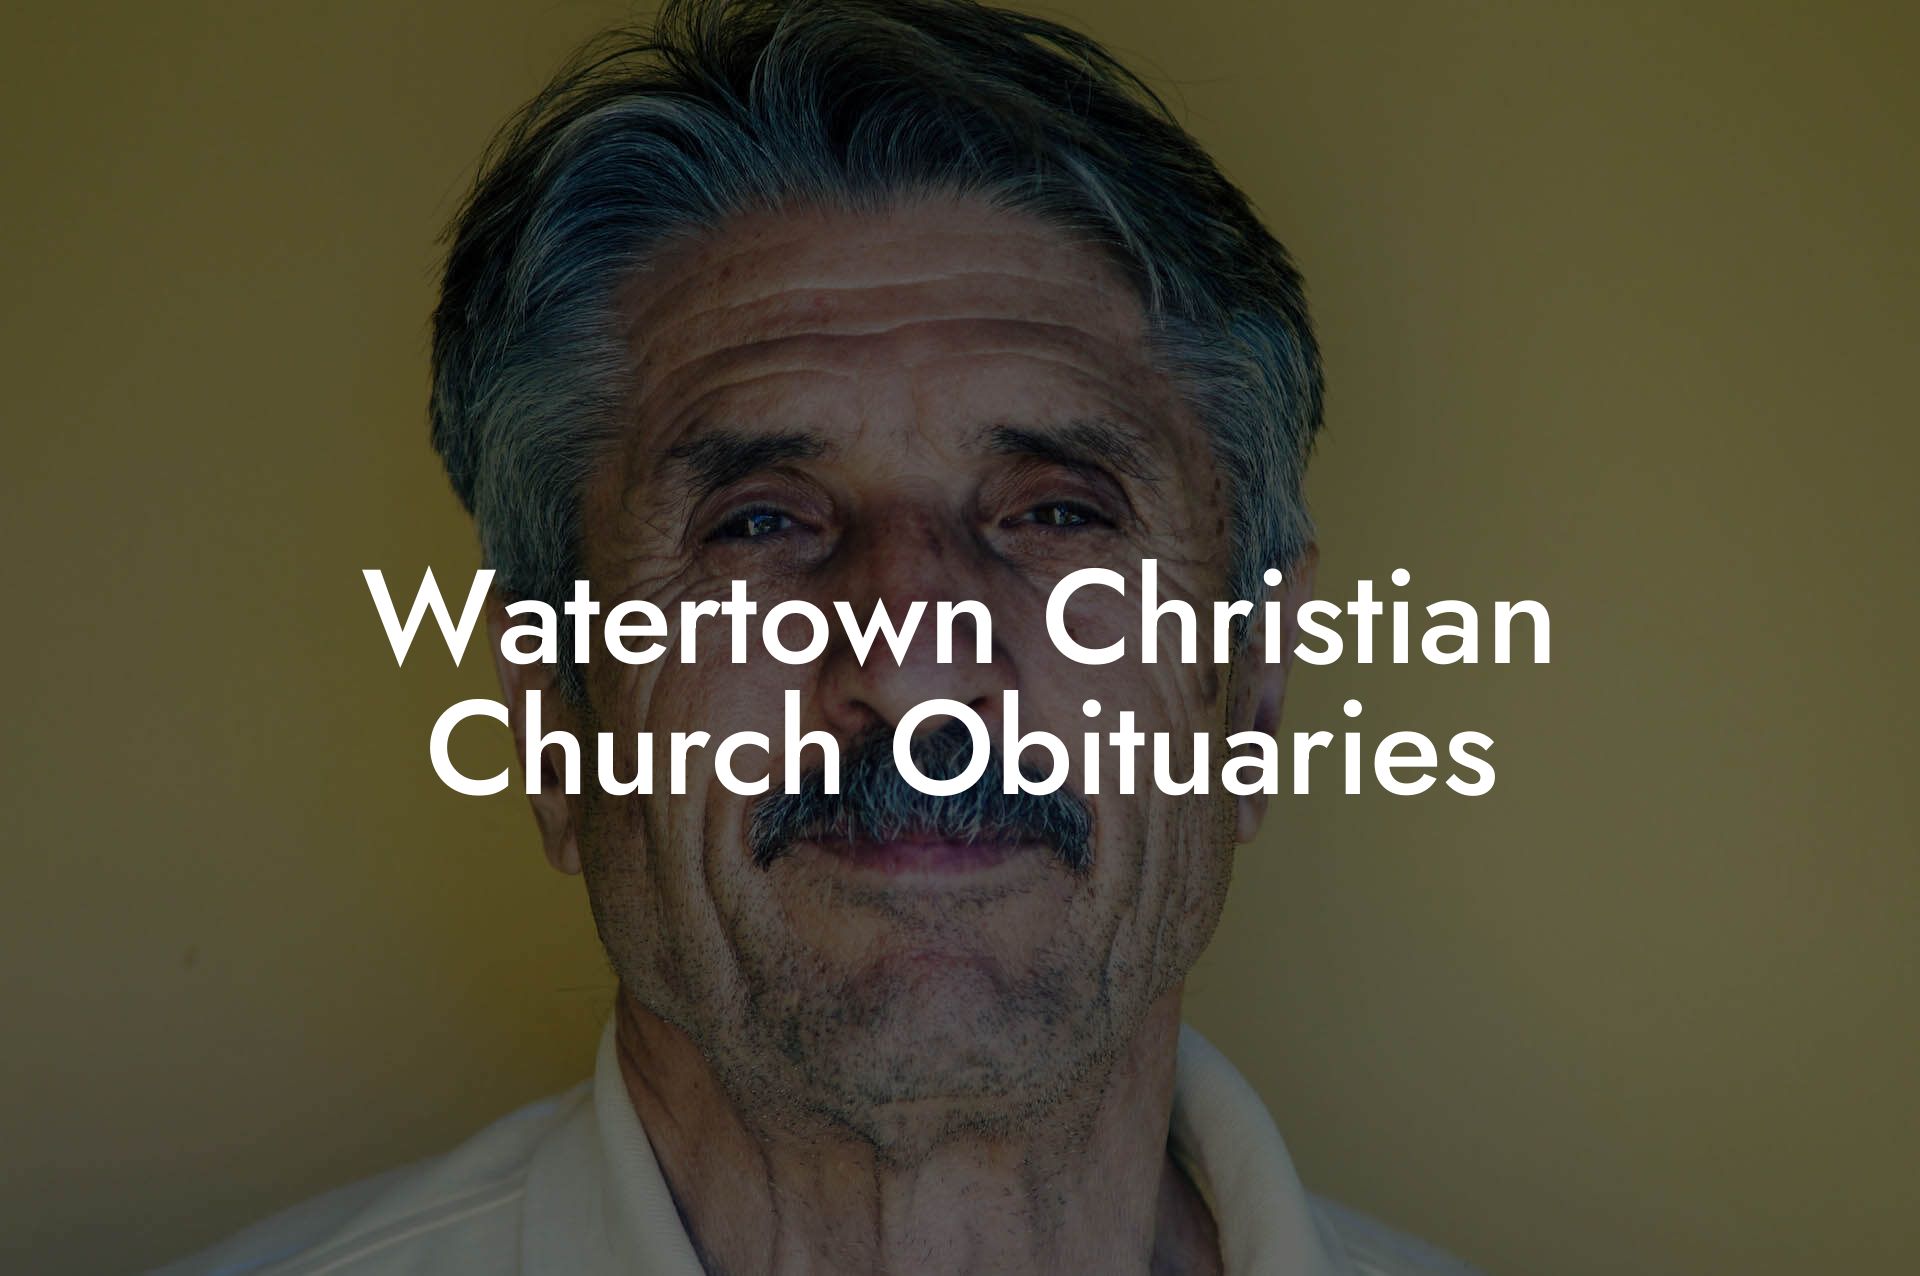 Watertown Christian Church Obituaries